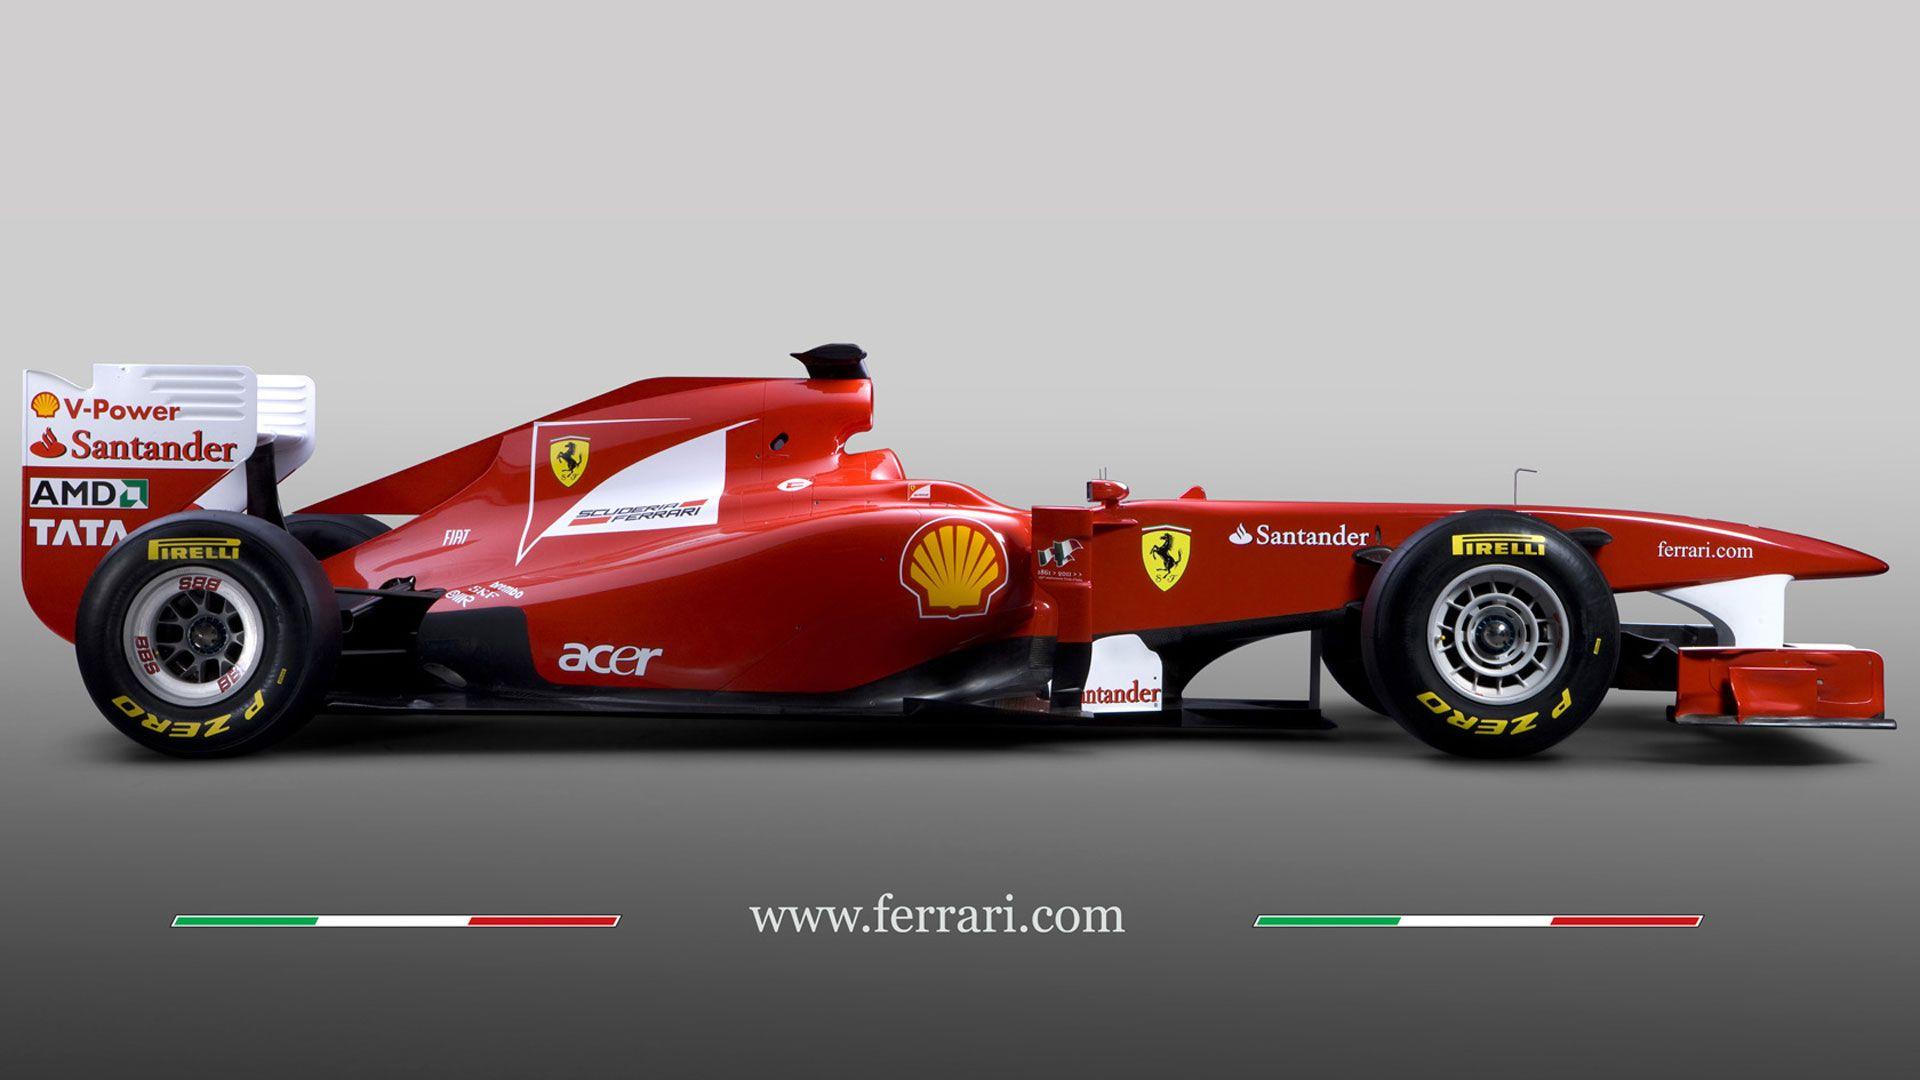 Ferrari F1 Wallpaper. Car Image Site. Ferrari f1